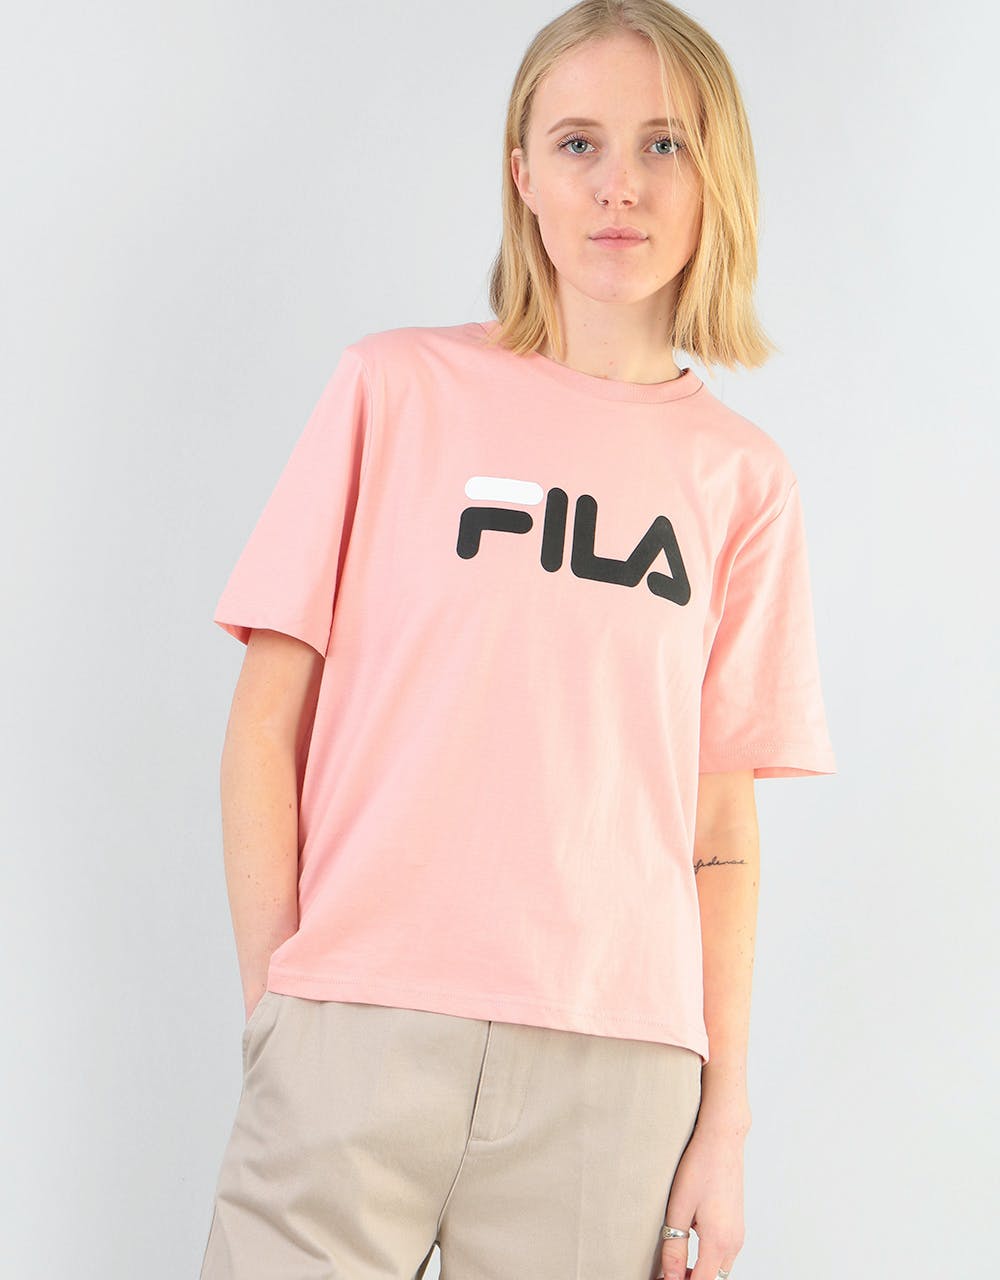 Fila Womens Miss Eagle T-Shirt - Pink